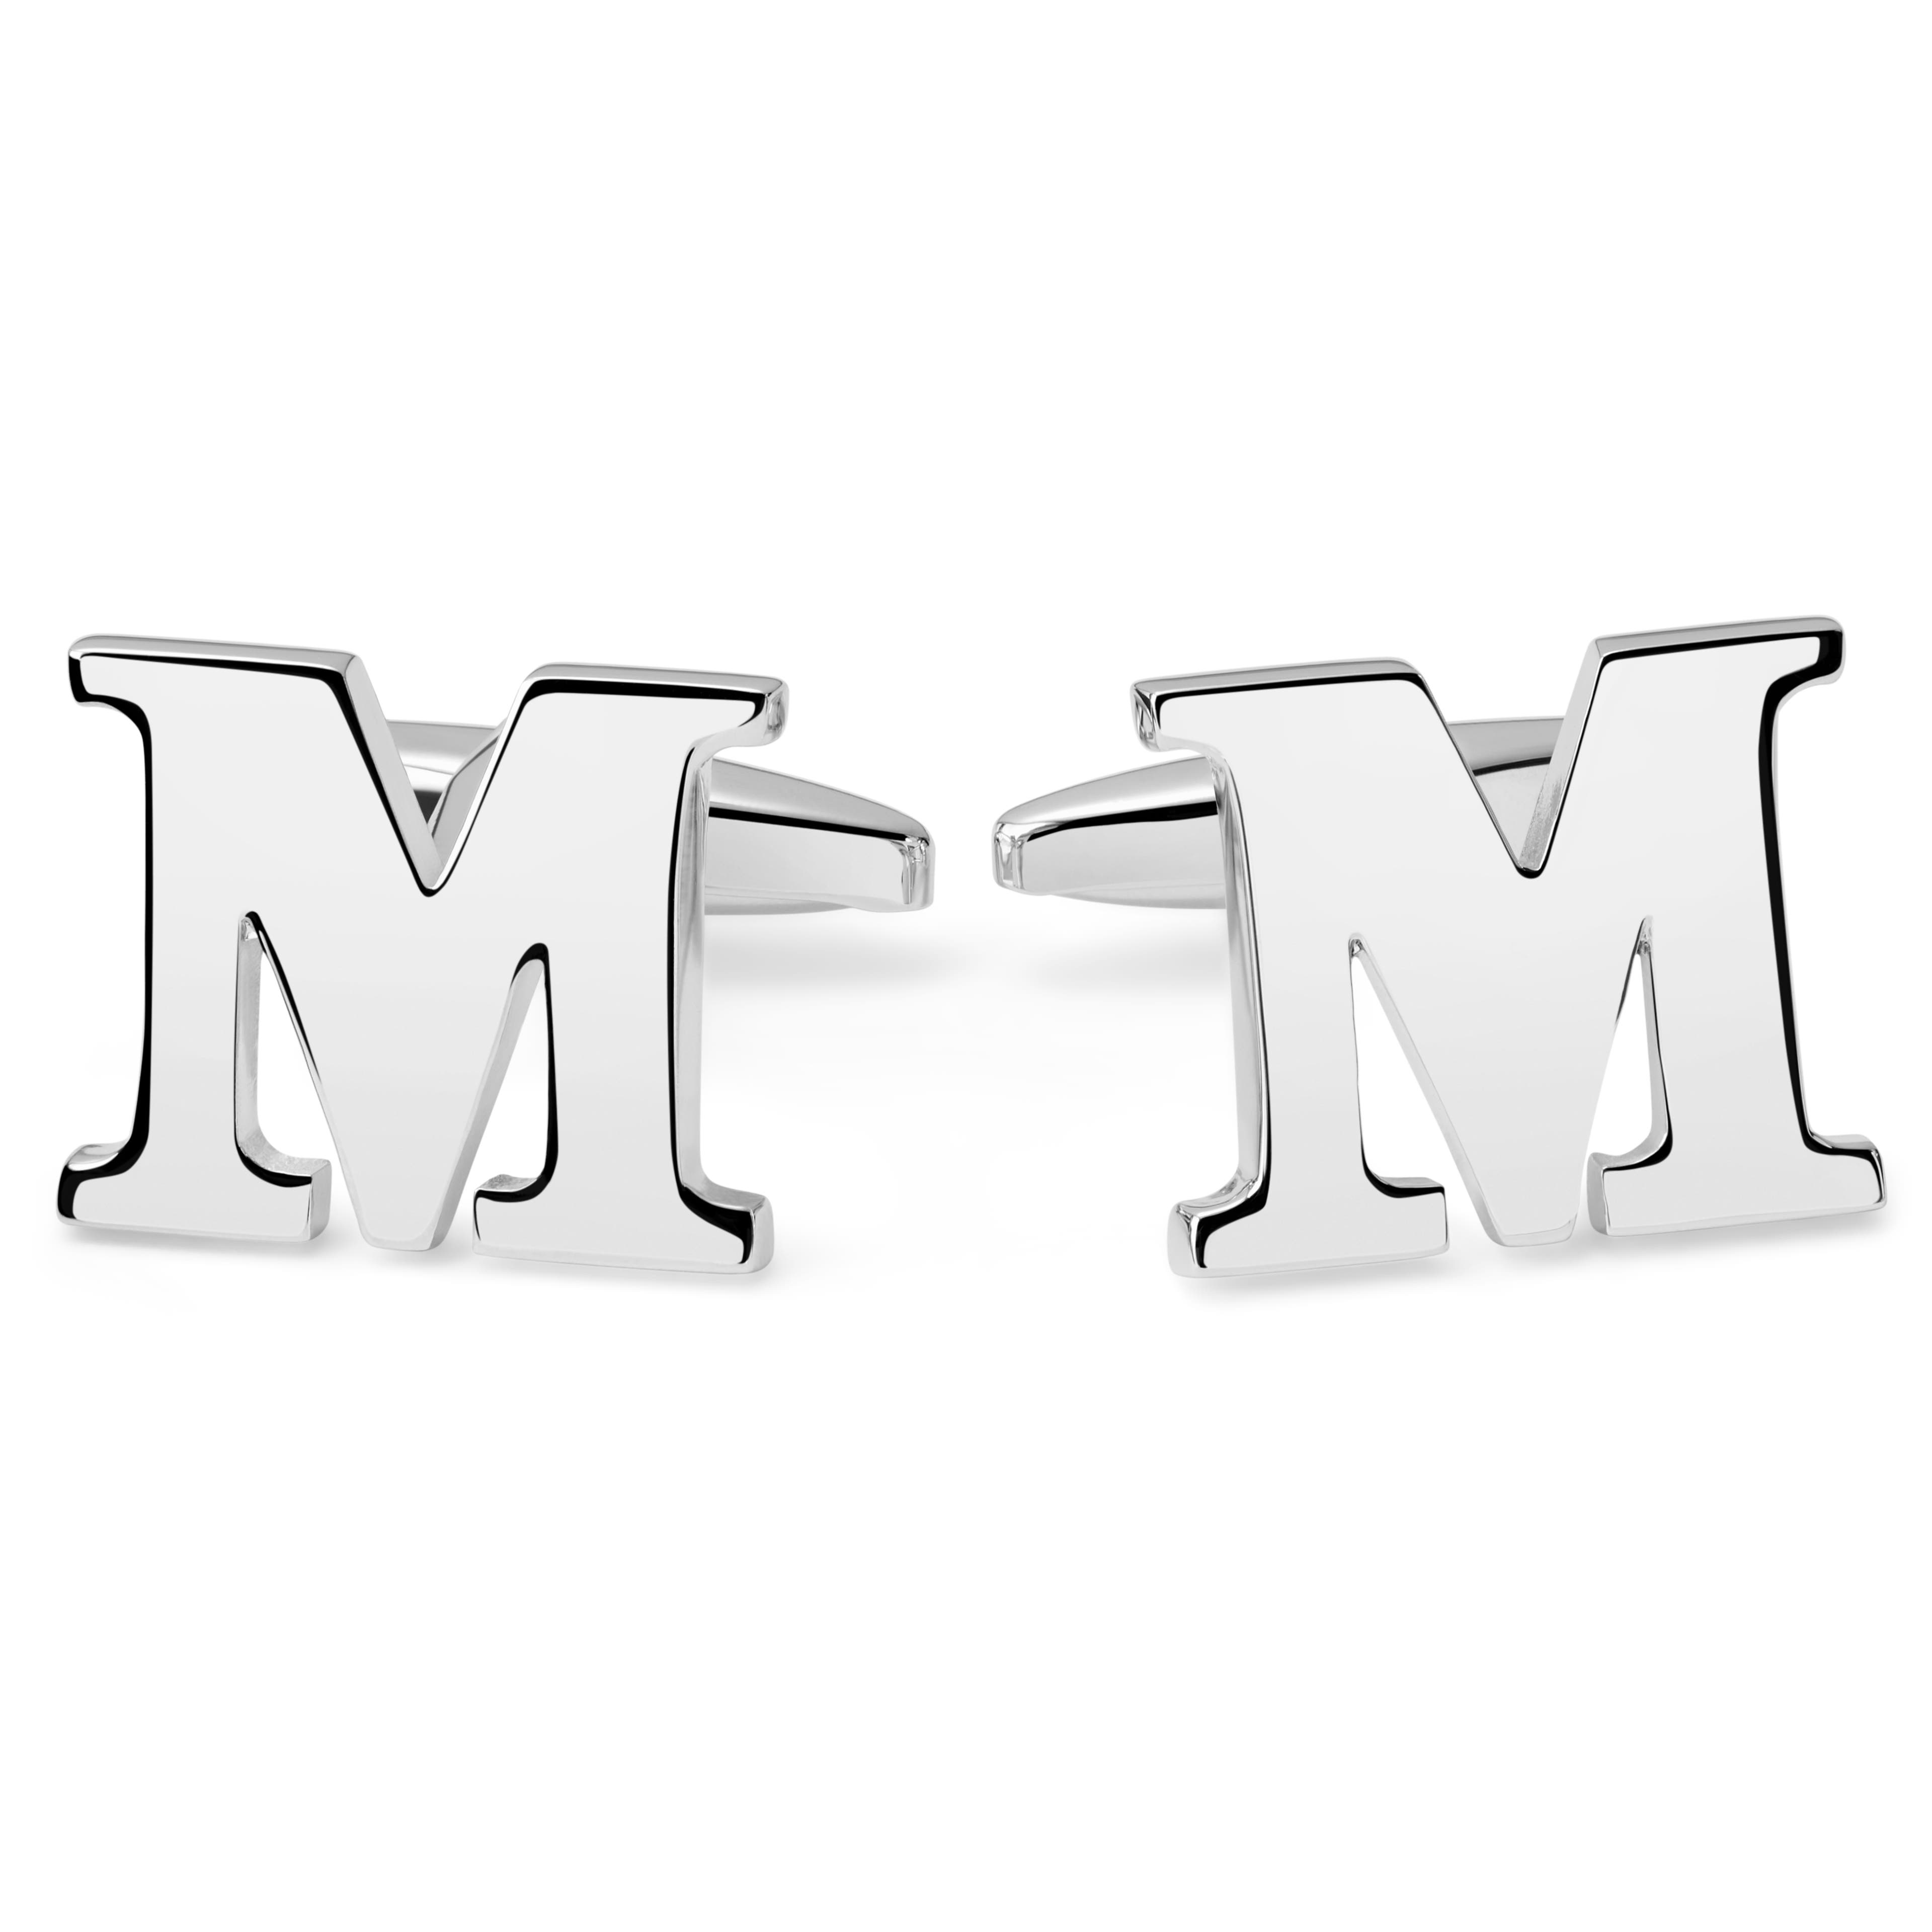 Silver-Tone Letter M Initial Cufflinks